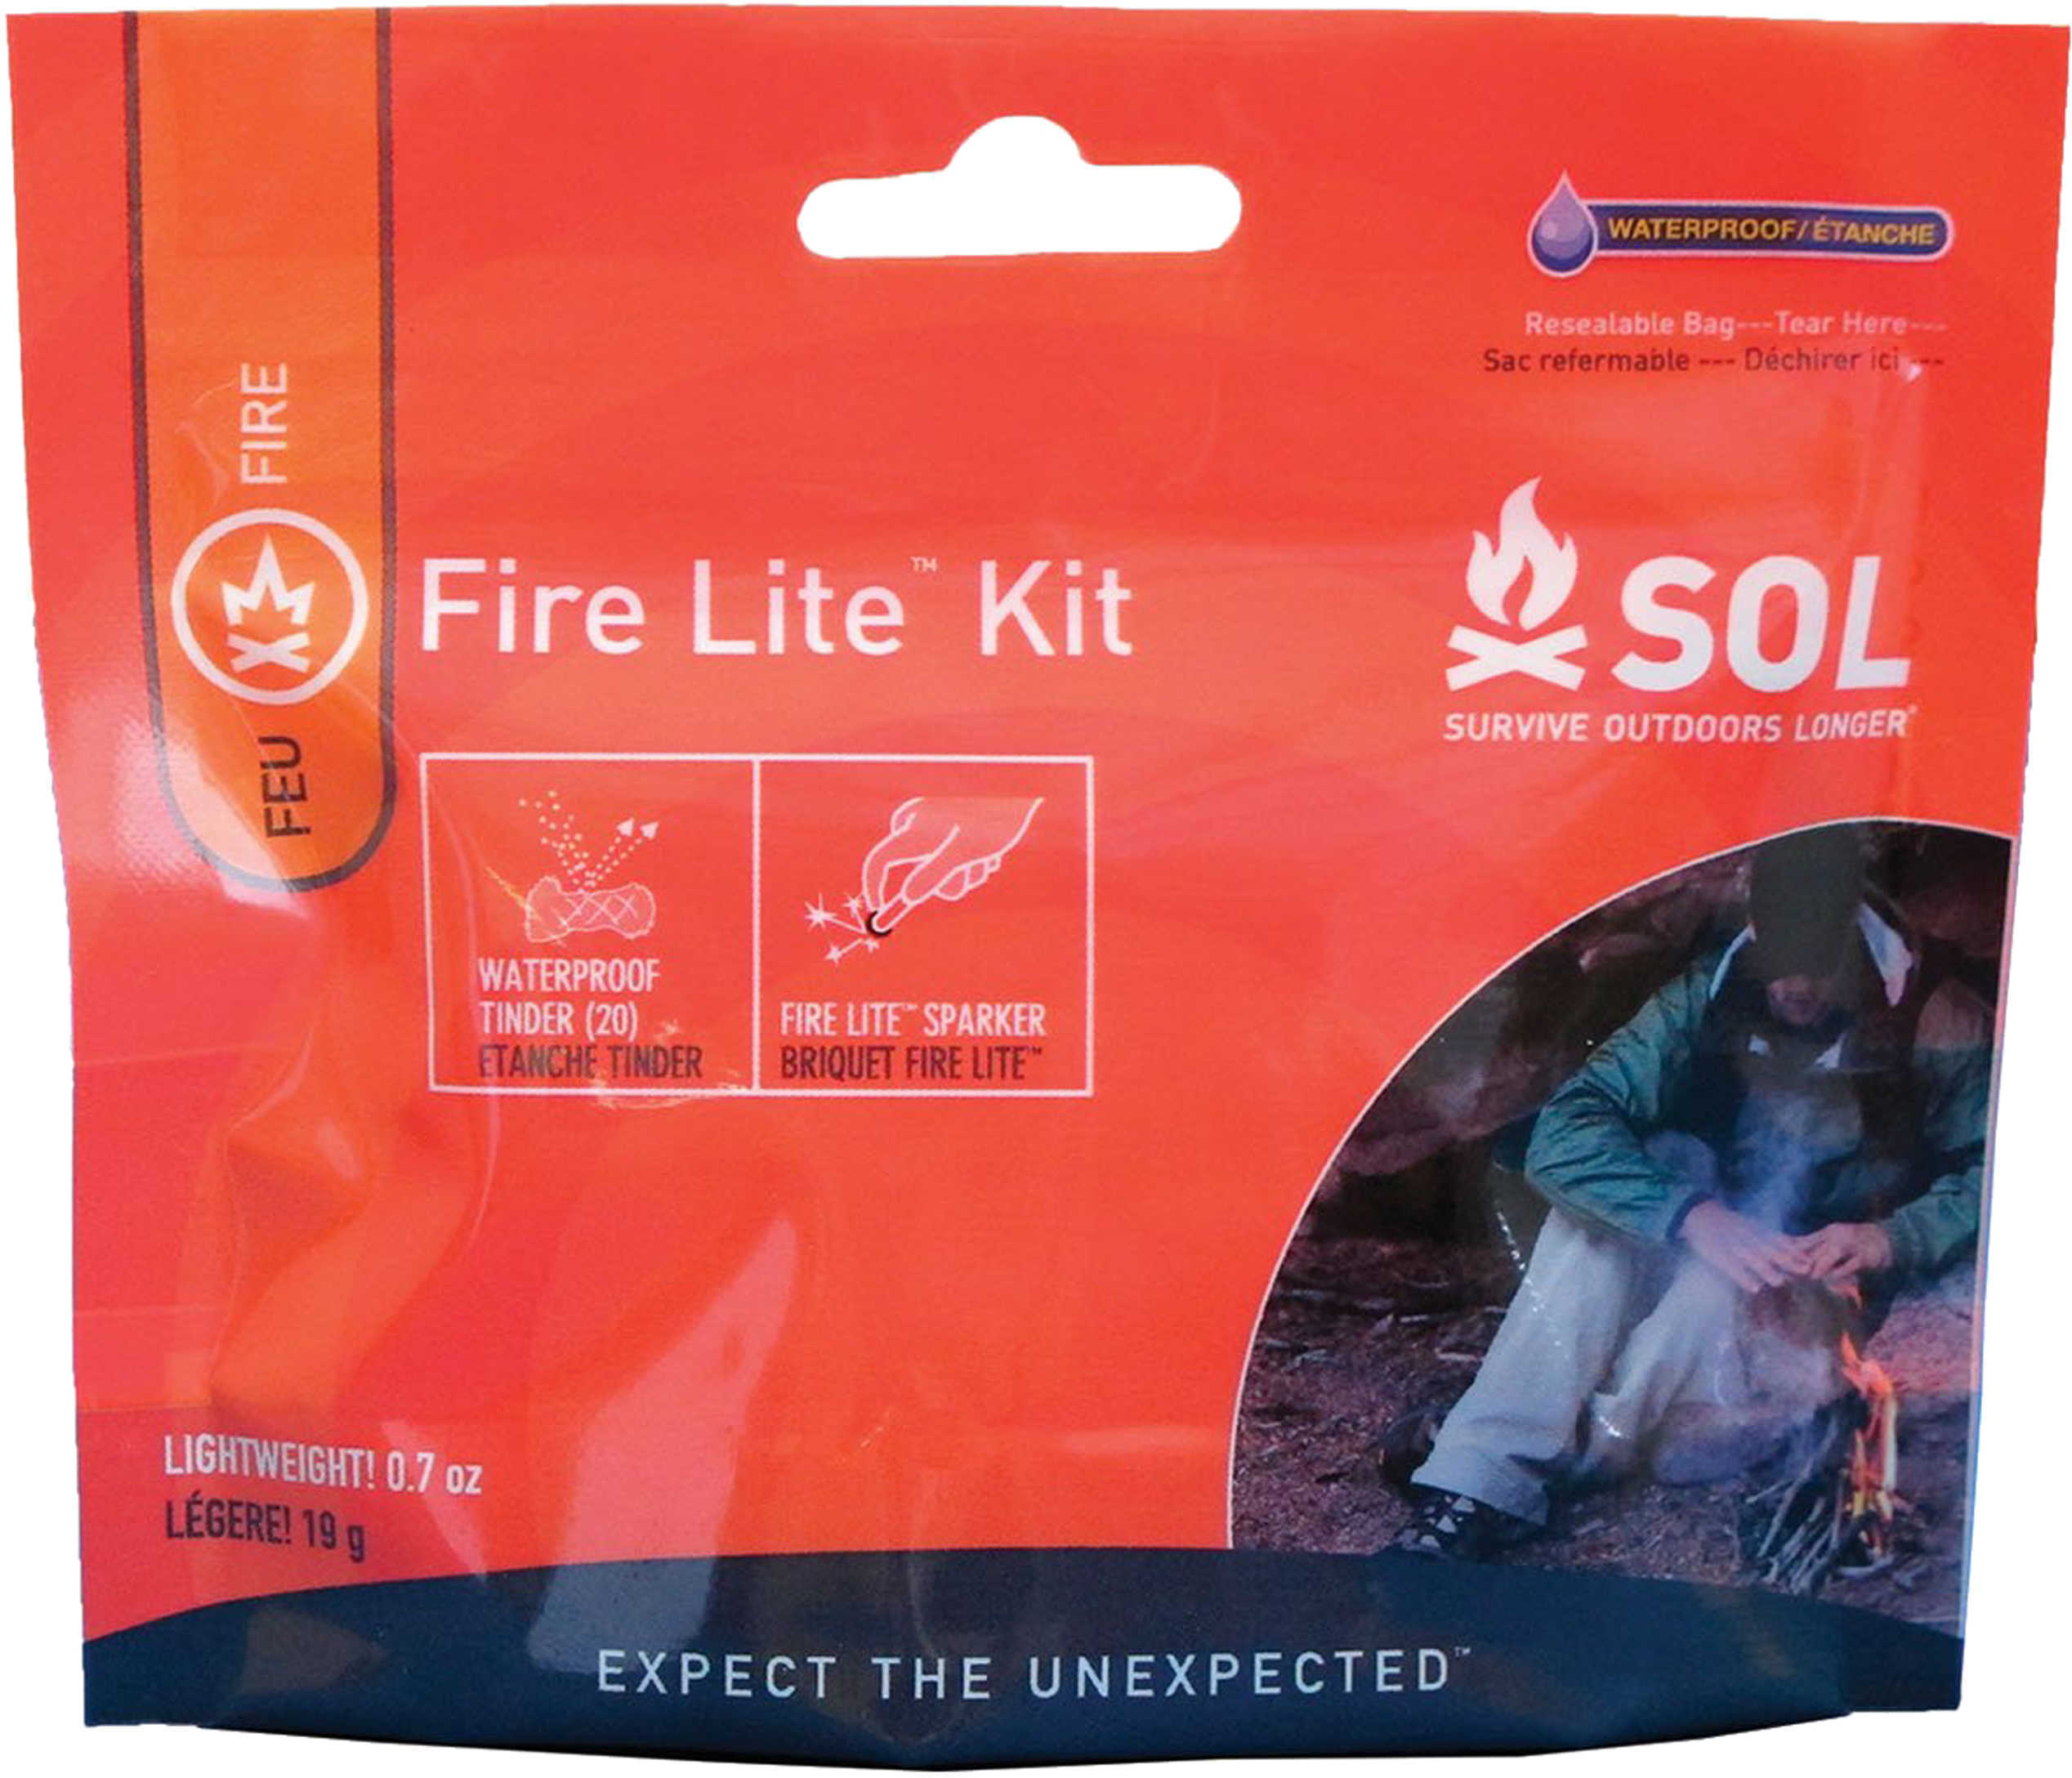 Survive Outdoors Longer / Tender Corp Adventure Medical SOL Series Fire Lite Kit 0140-1230